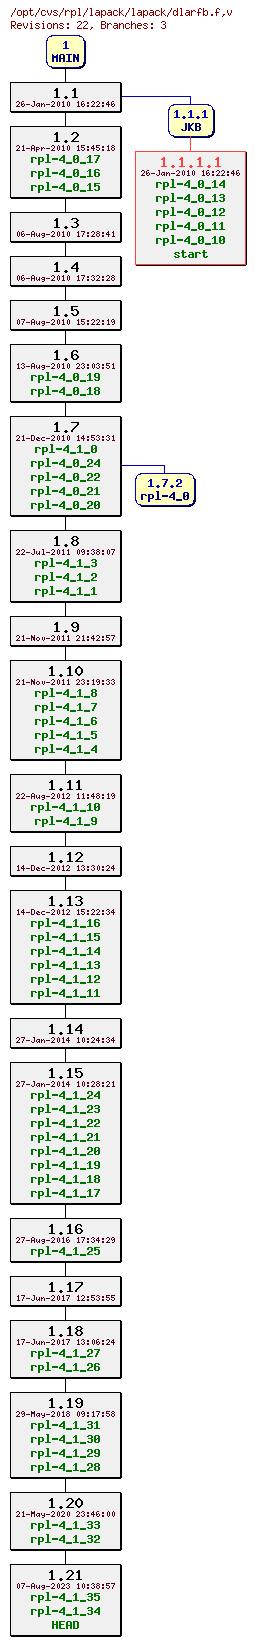 Revision graph of rpl/lapack/lapack/dlarfb.f